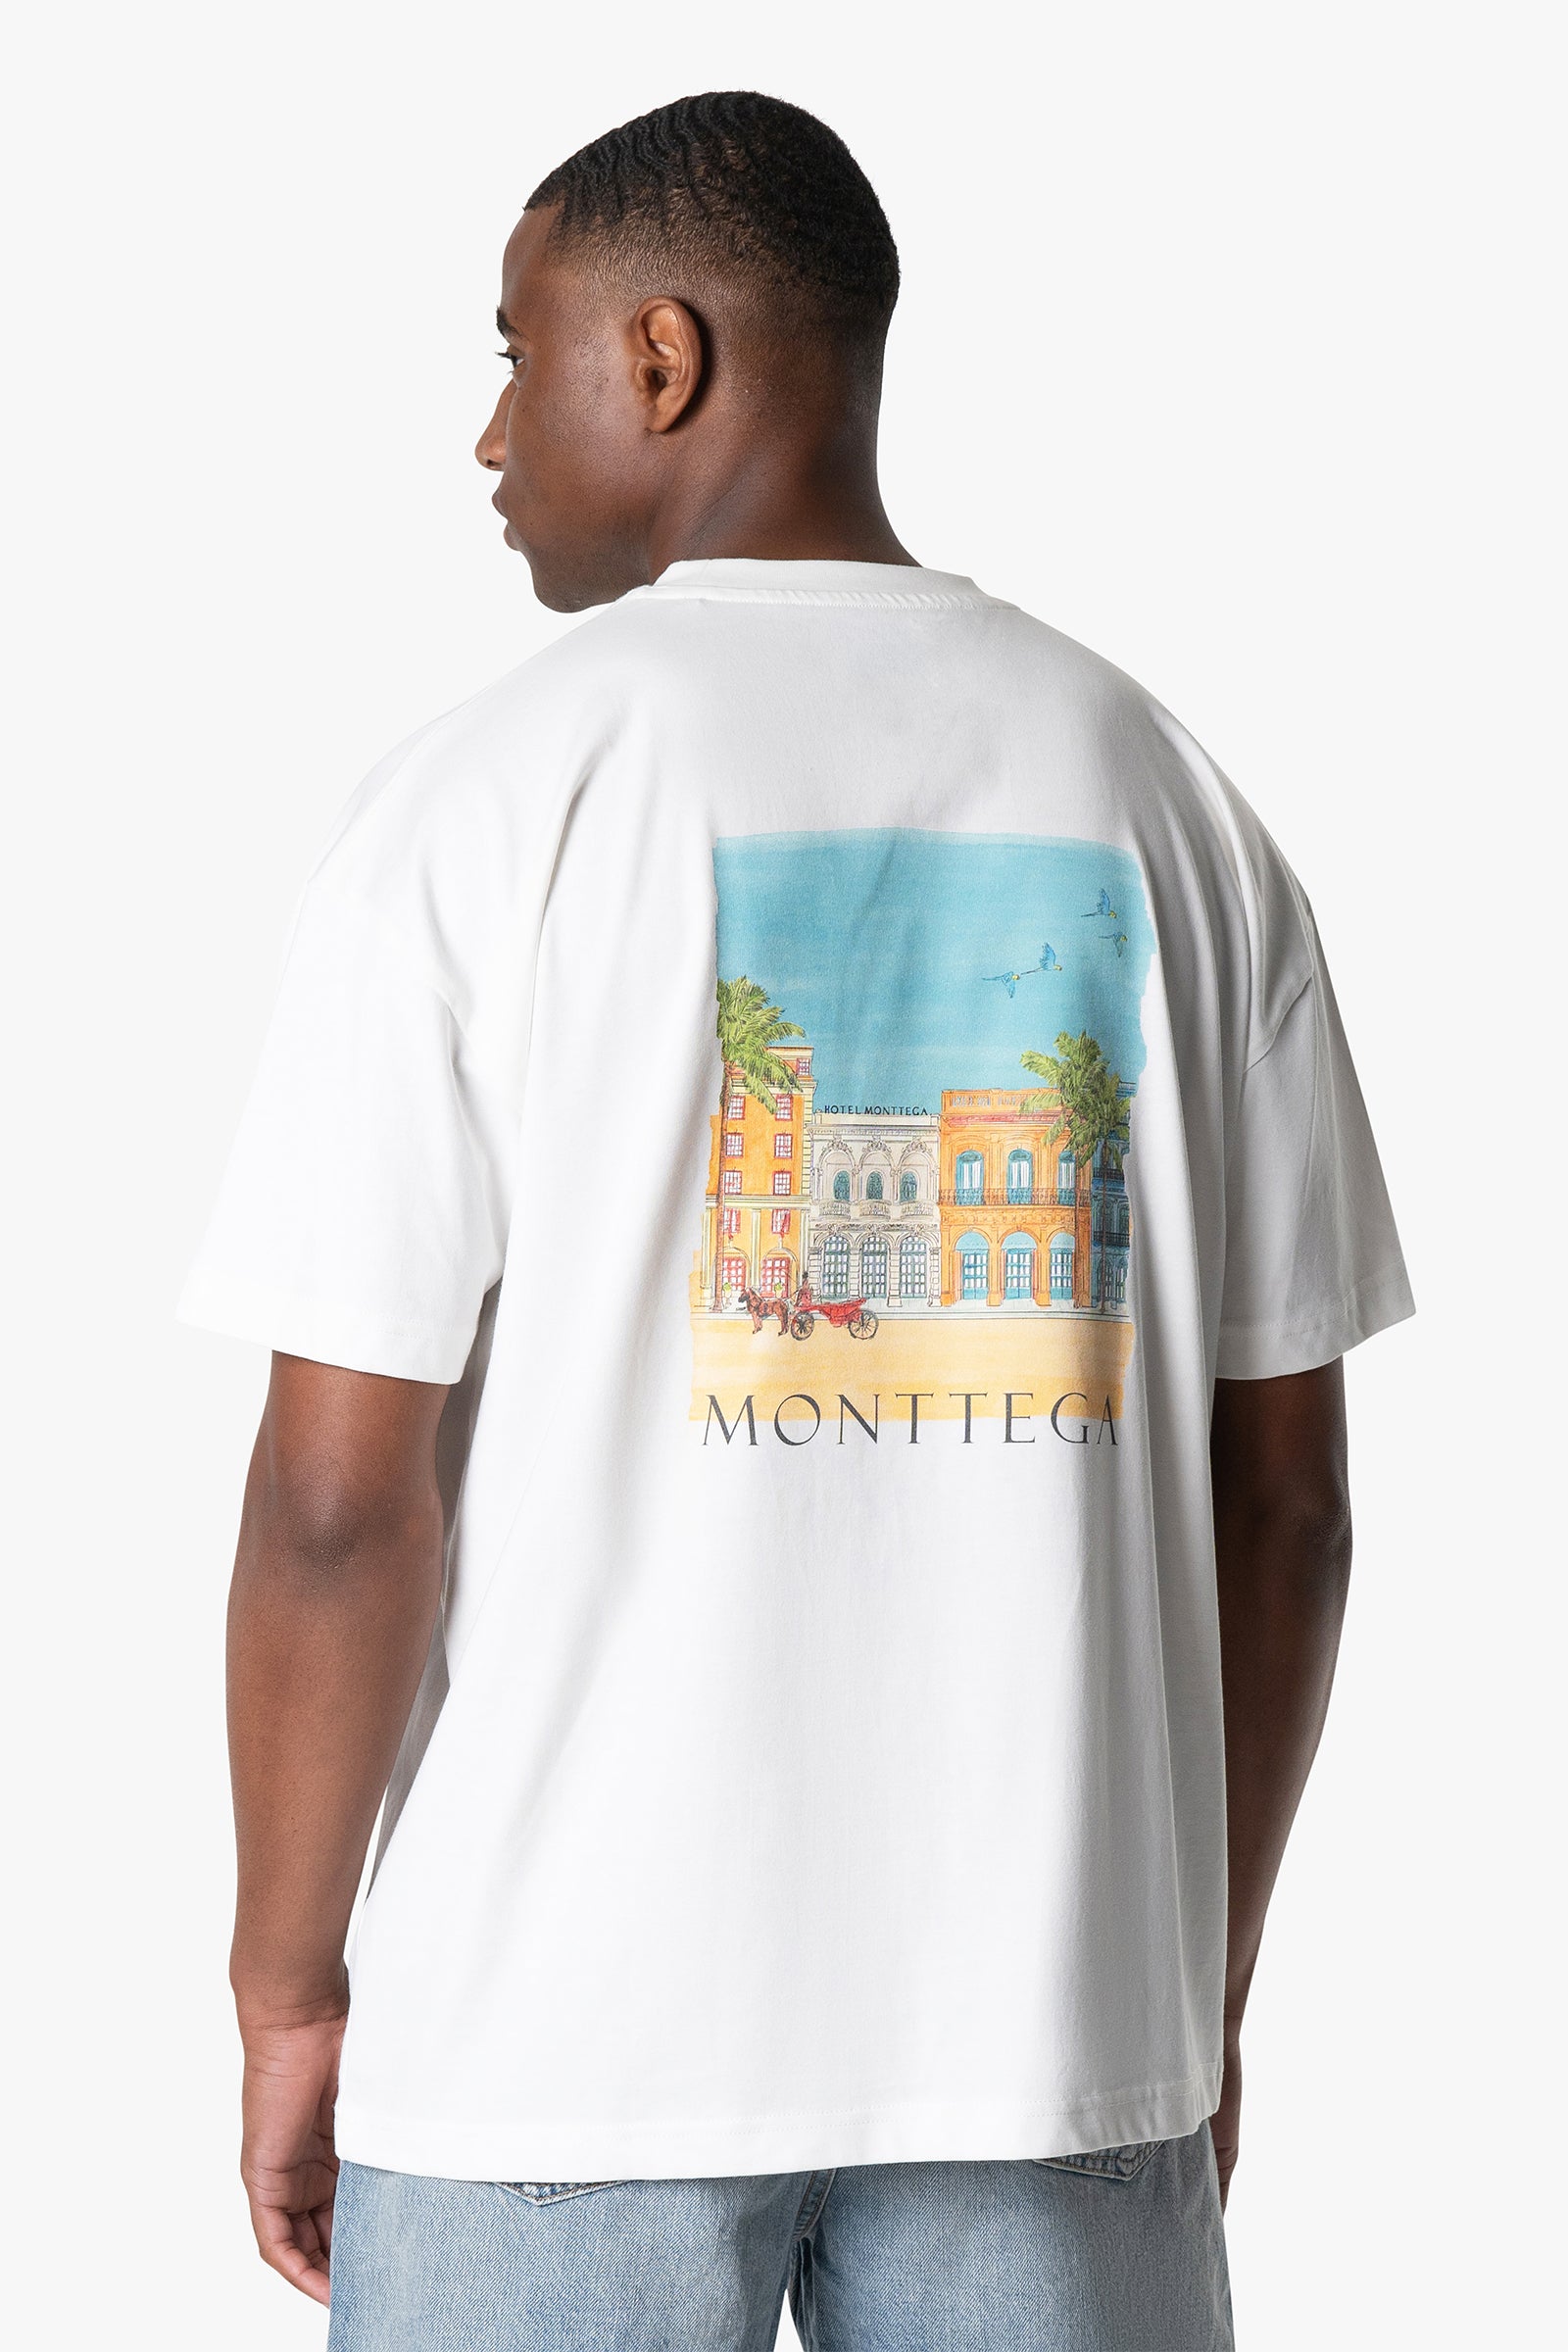 MONTTEGA HOTEL T-SHIRT